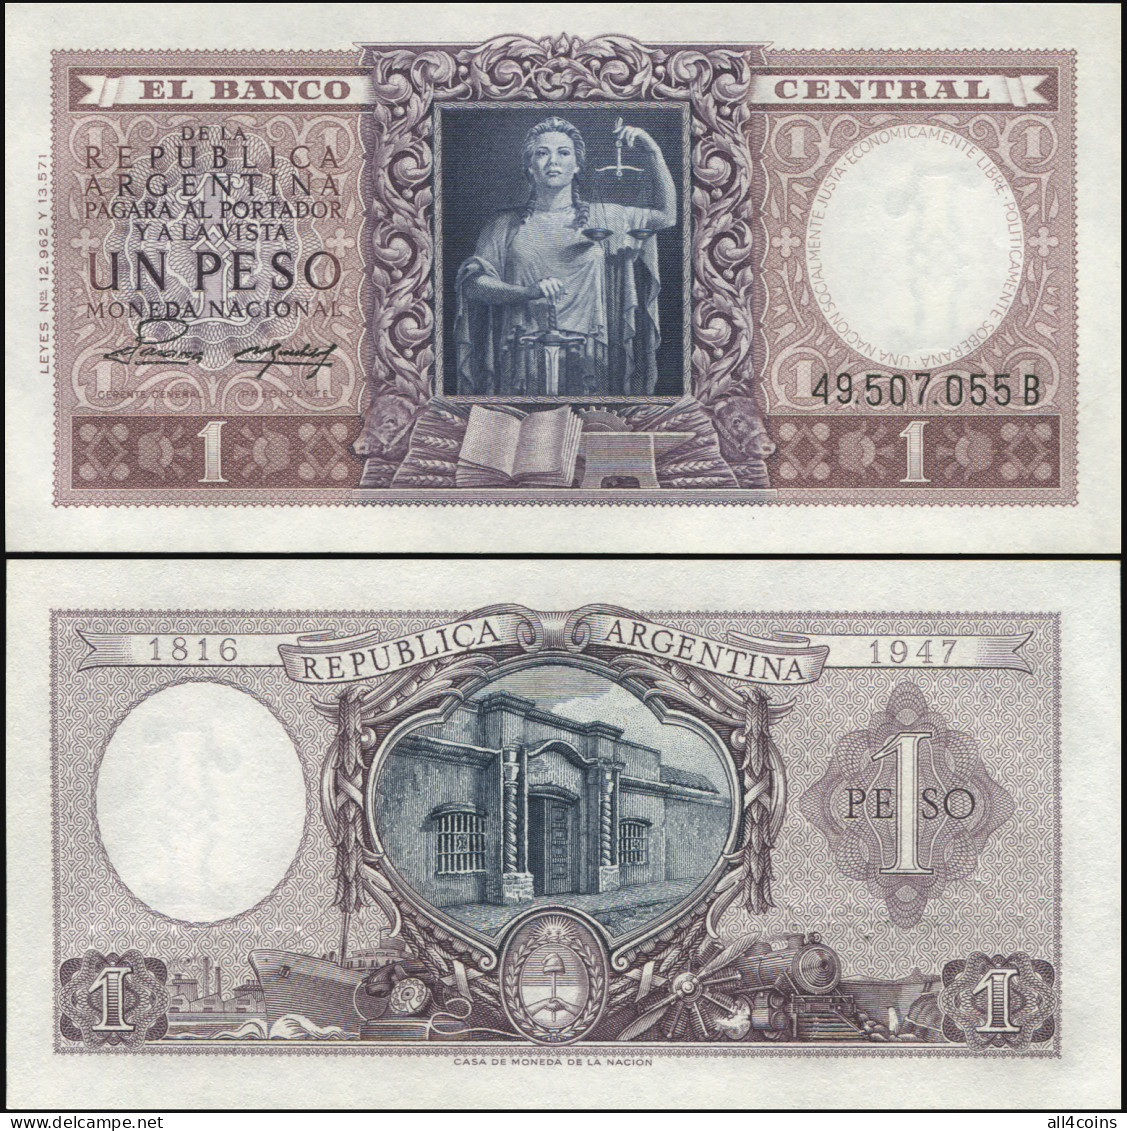 Argentina 1 Peso. ND (1952) Unc. Banknote Cat# P.260b [Serie A] - Argentine